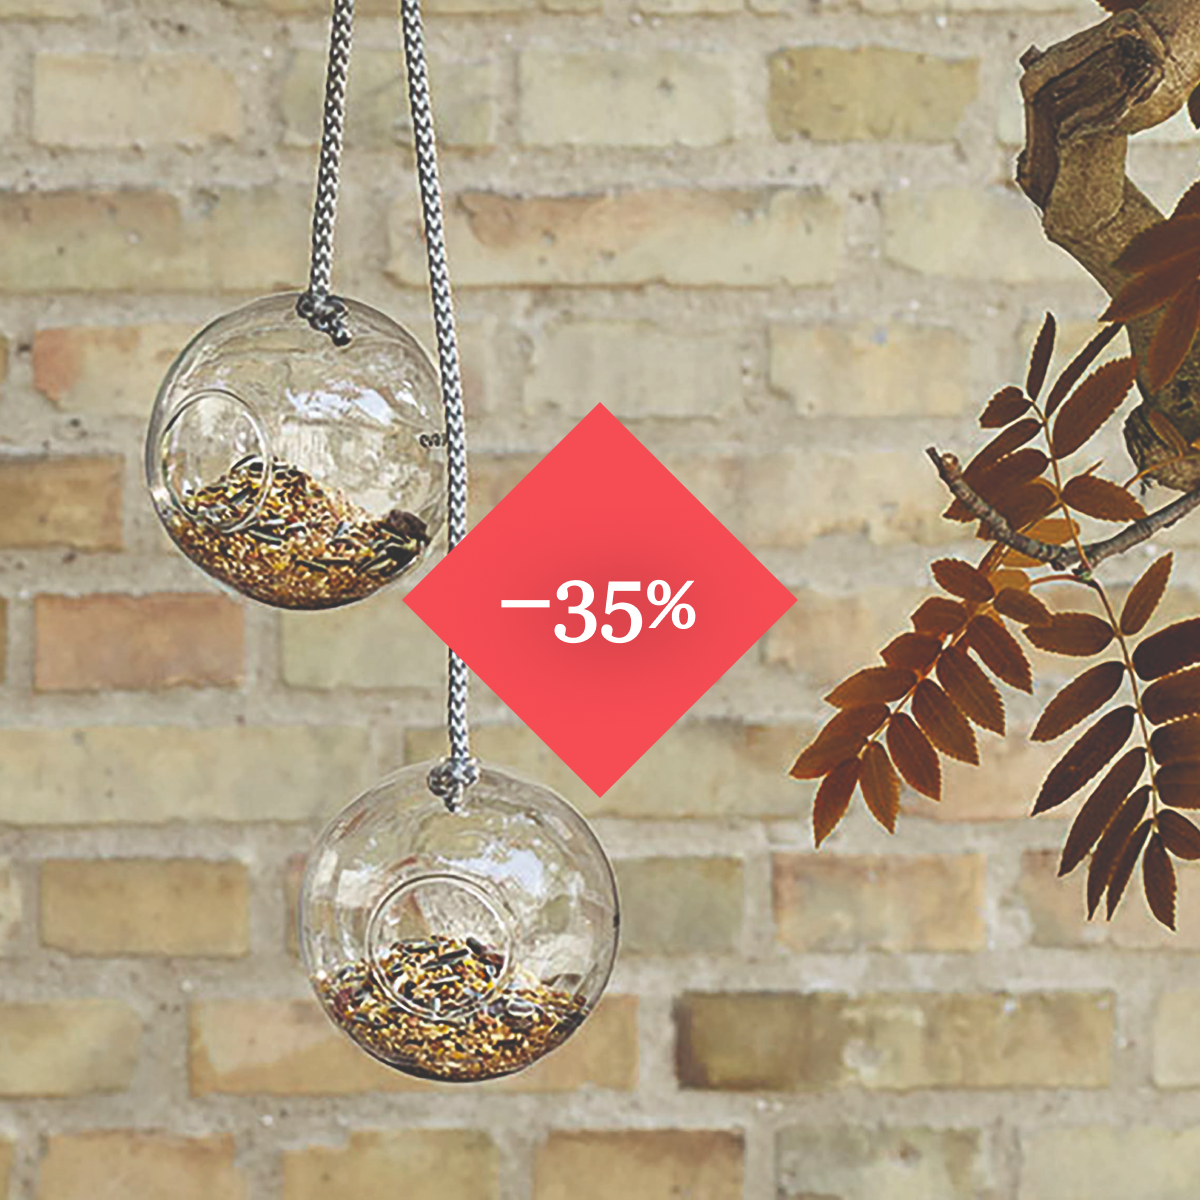 35% off glass bird feeders